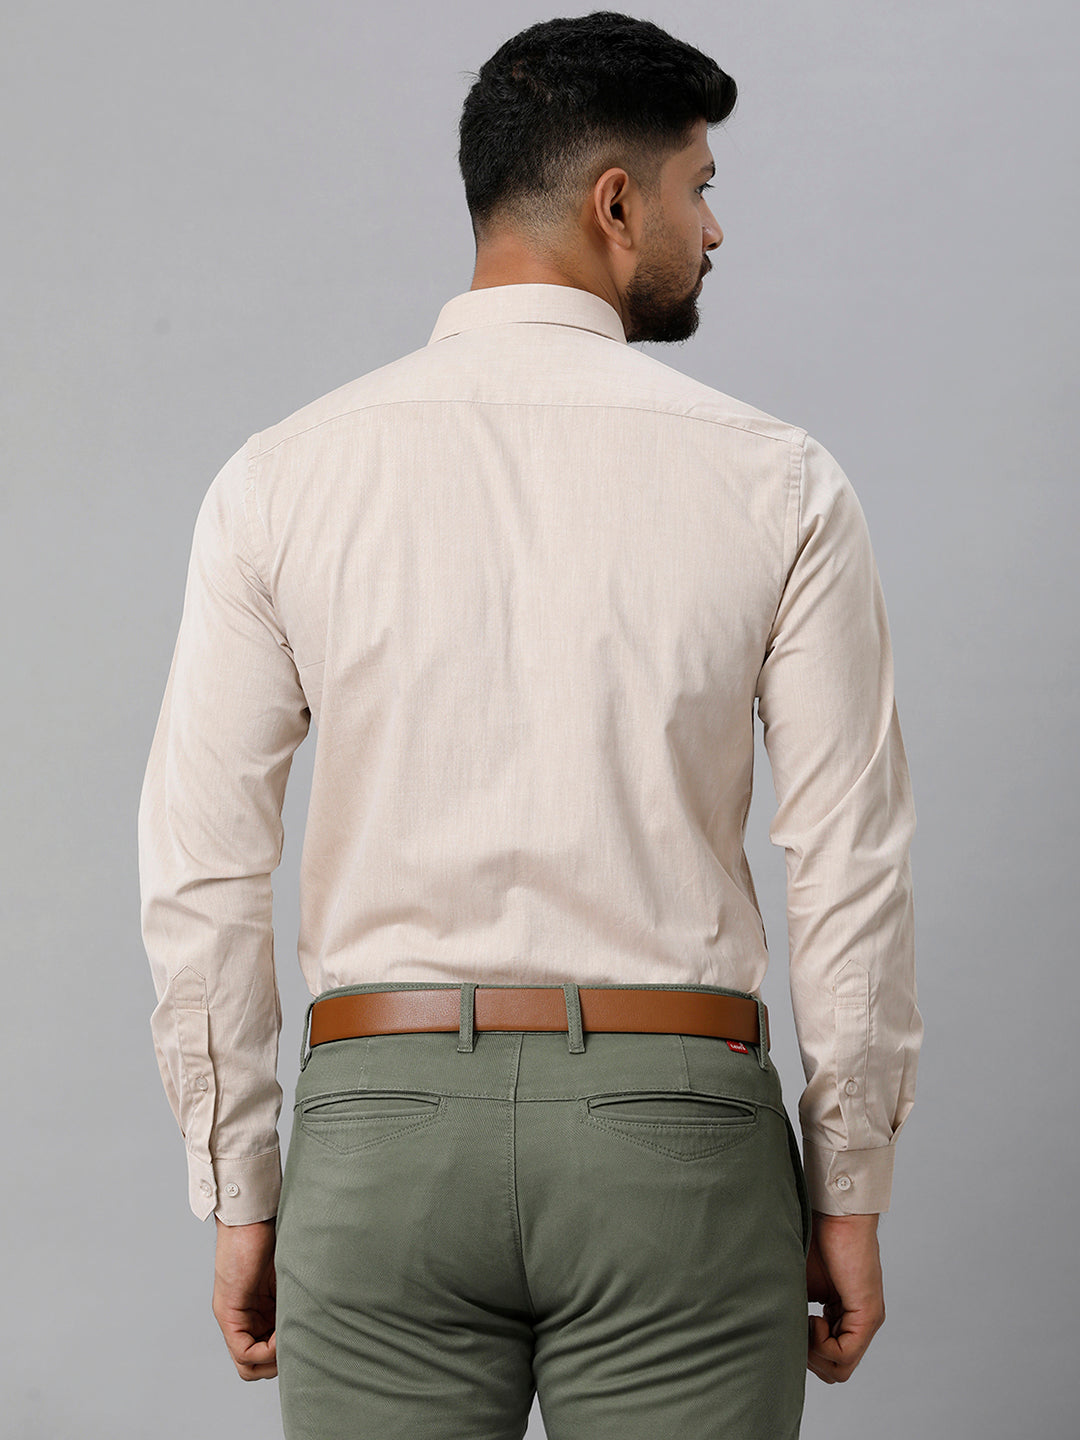 Mens Premium Cotton Formal Shirt Full Sleeves Light Brown MH G113-Back view